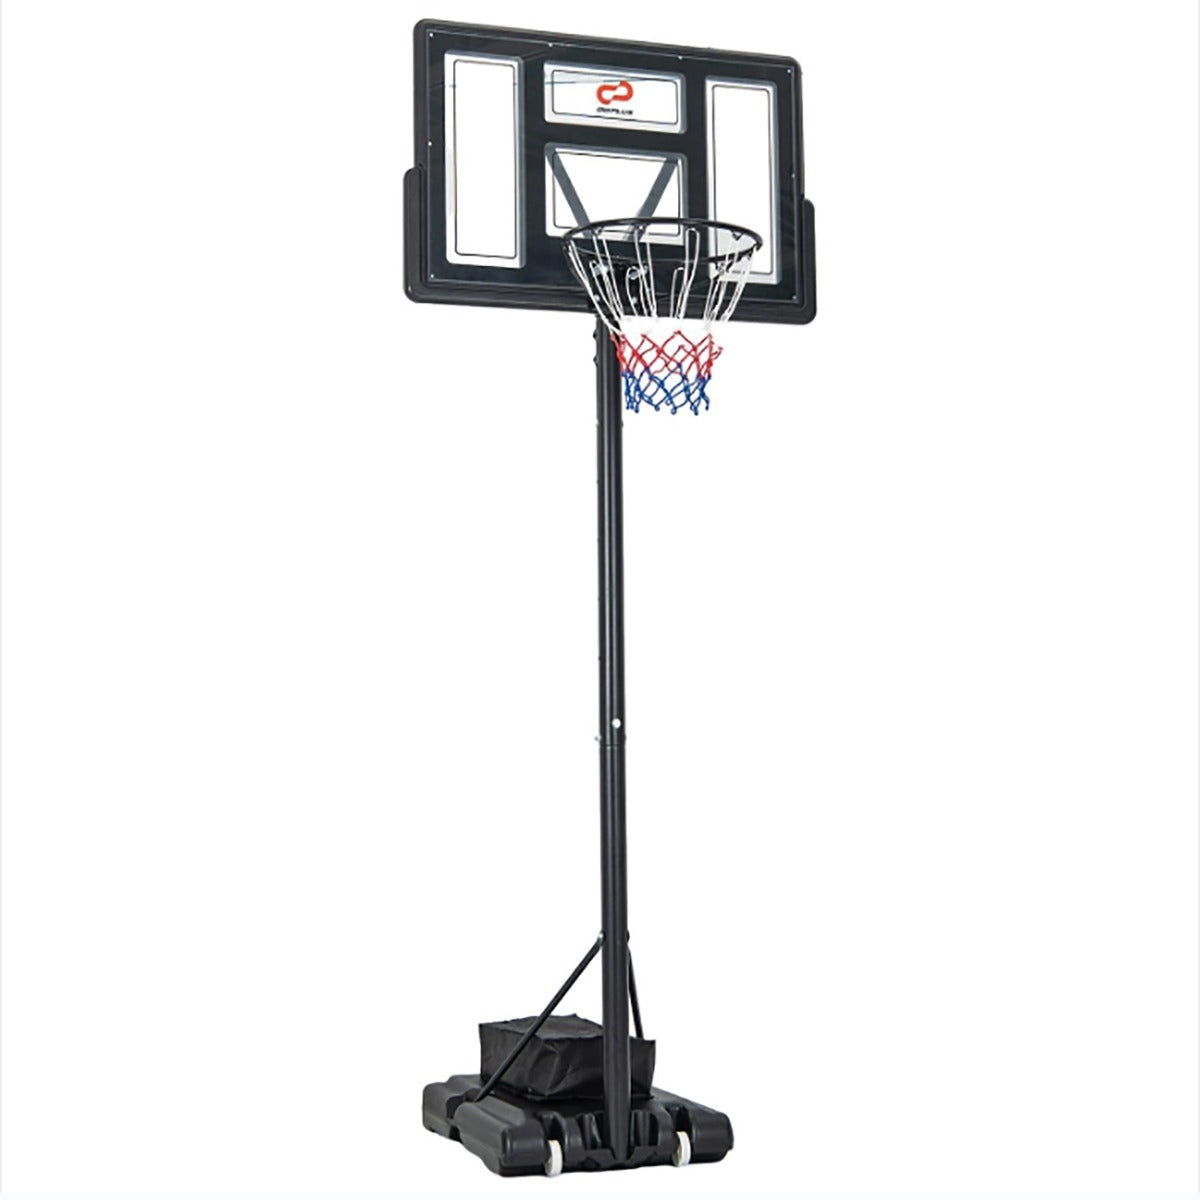 Portable Basketball Hoop with Height Adjustable